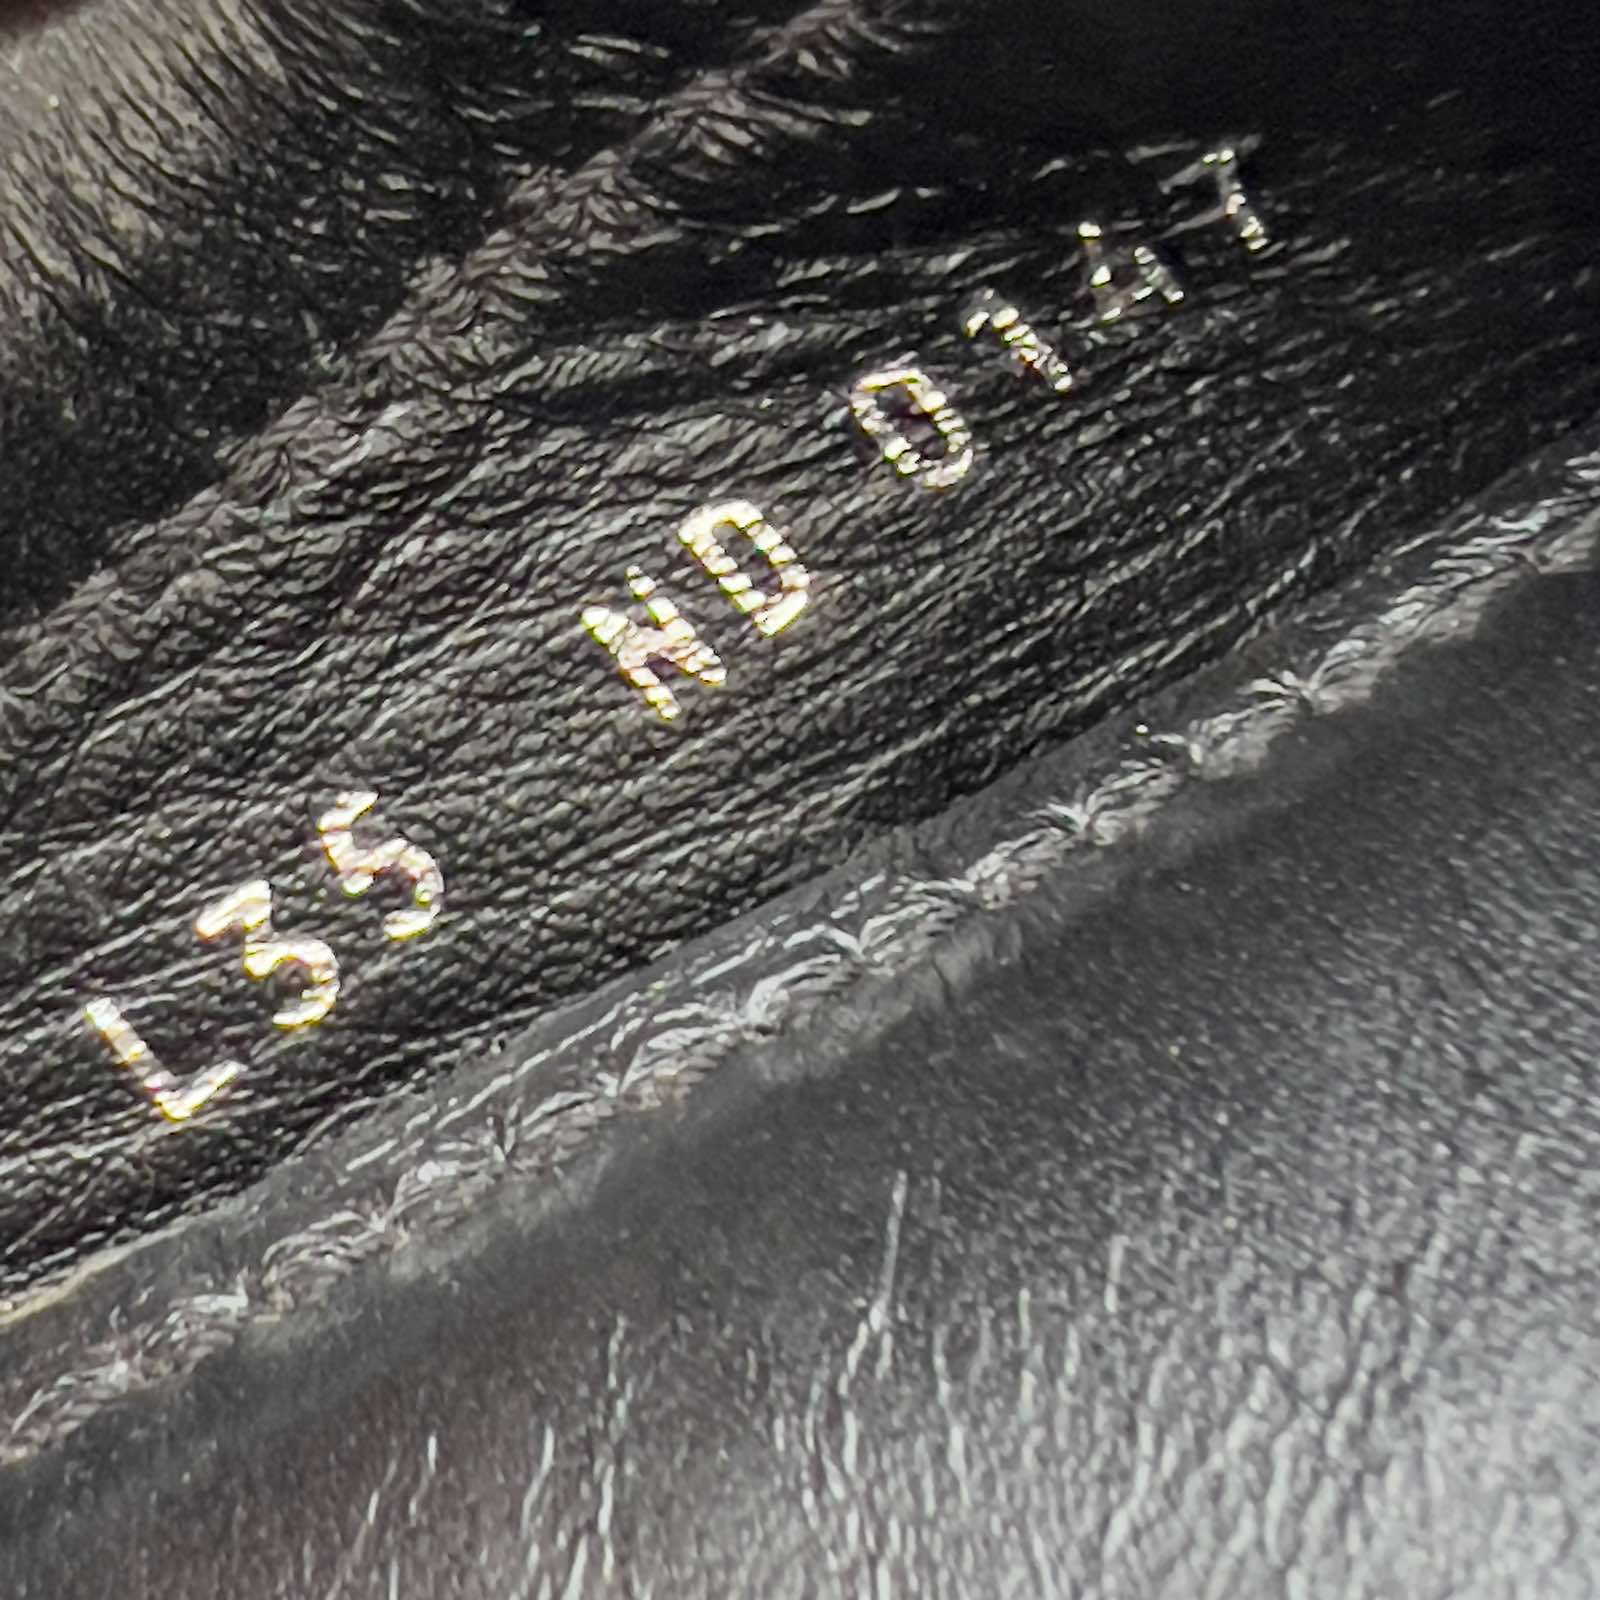 Louis Vuitton, Shoes, Authentic Louis Vuitton Gloria Flat Loafer 375 Box  Dust Bags Receipt Italy